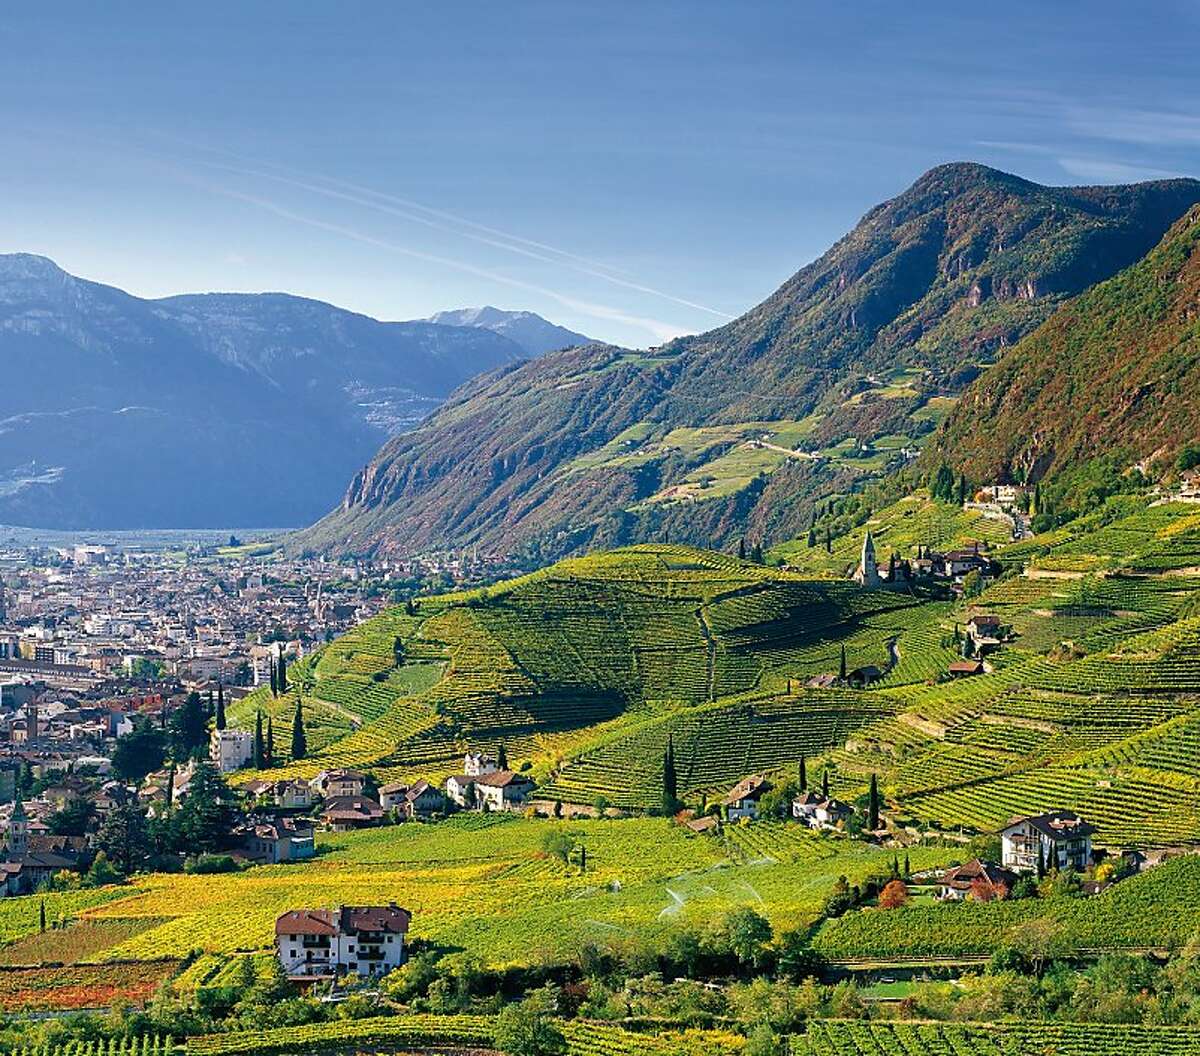 Vineyards in Santa Maddalena, above the town of Bolzano (in the background) in the Alto Adige region of Italy.